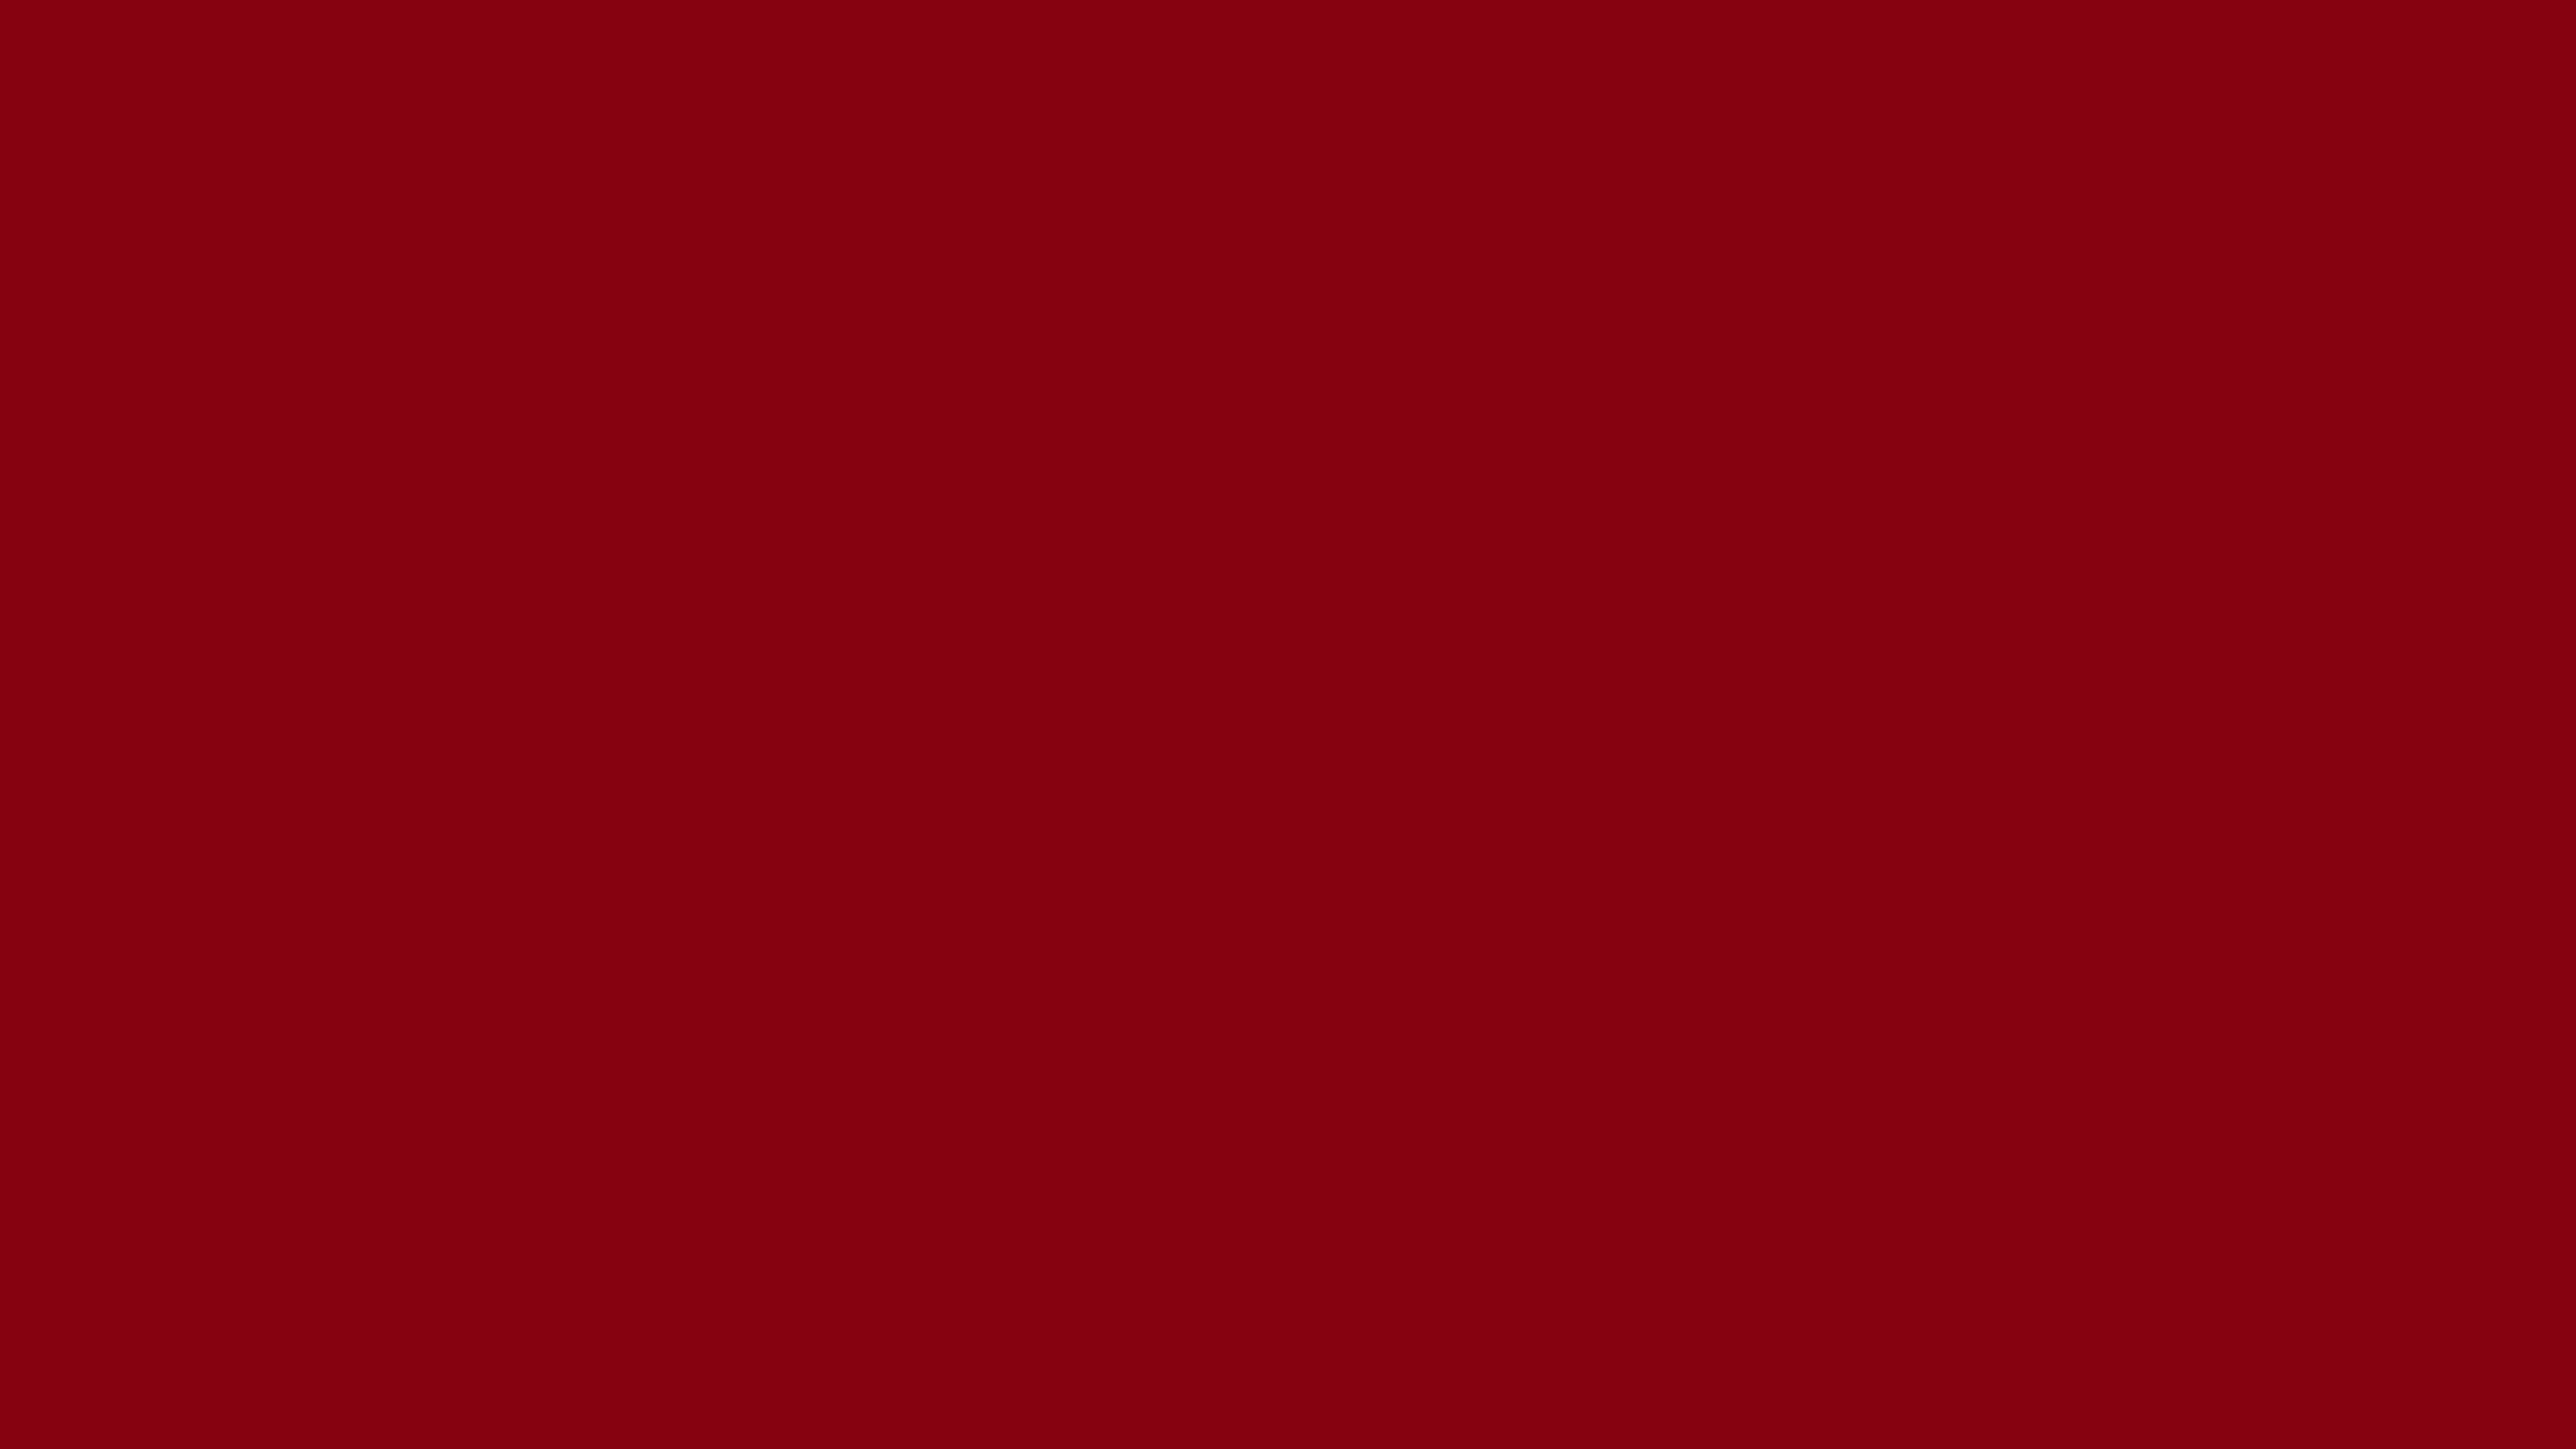 4096x2304 Red Devil Solid Color Background